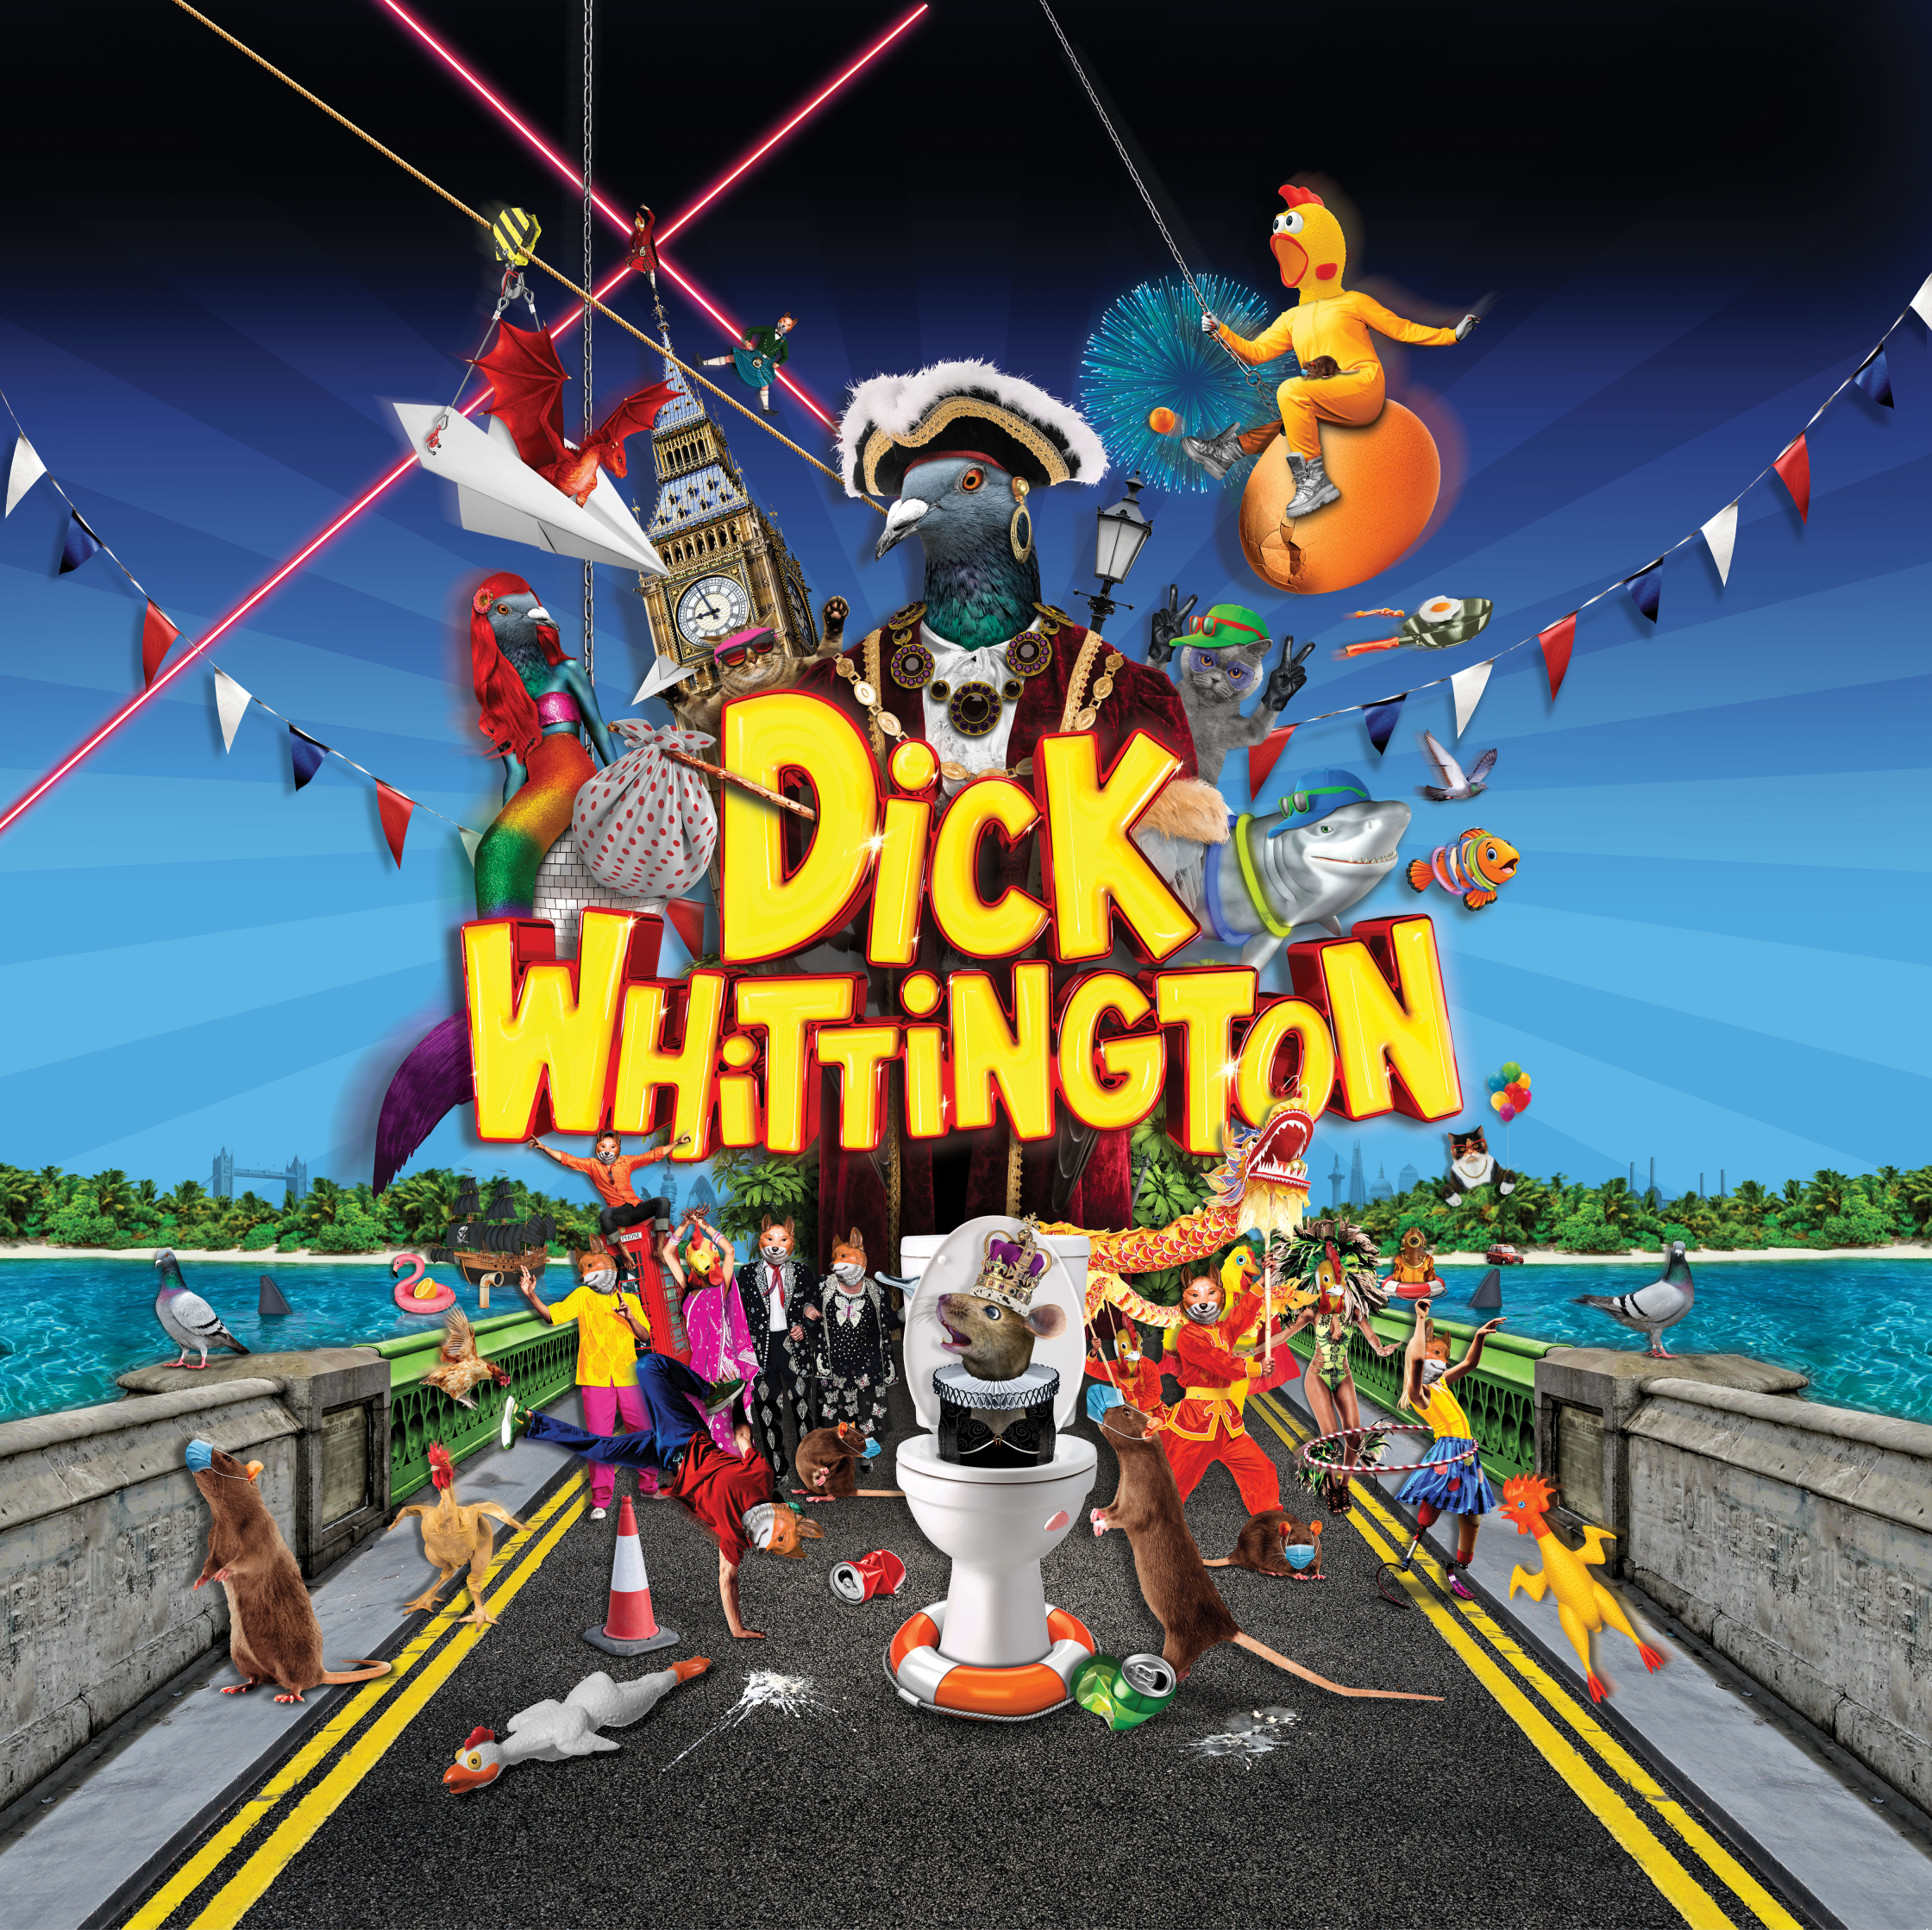 Dick-Whittington-low-res.jpg